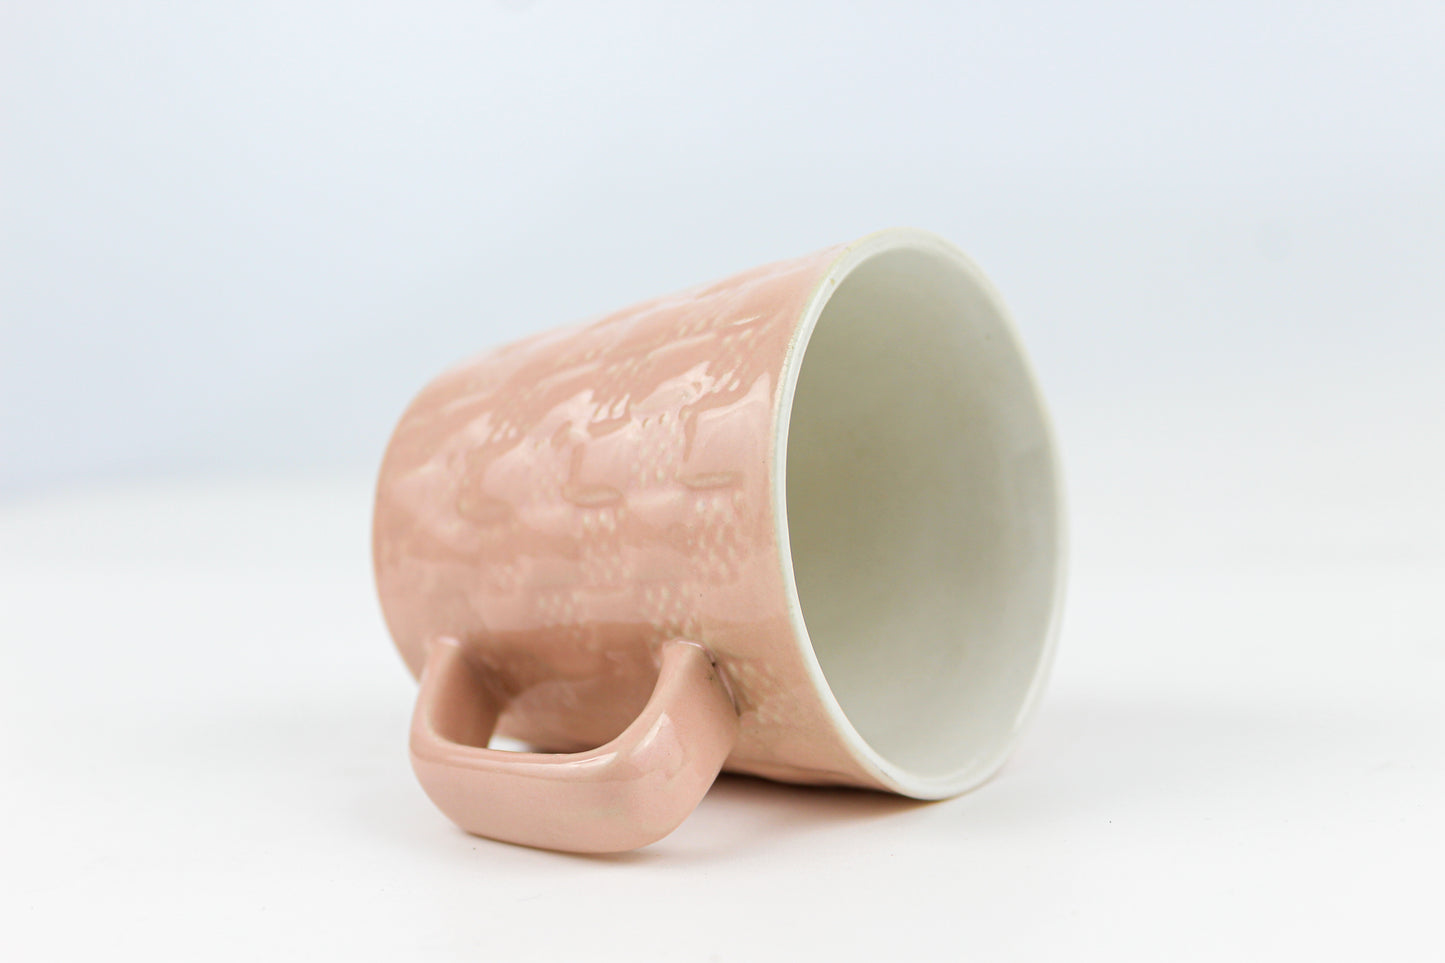 Tea Mate - Maroon/Rose Pink Handcrafted Ceramic Coffee Mugs